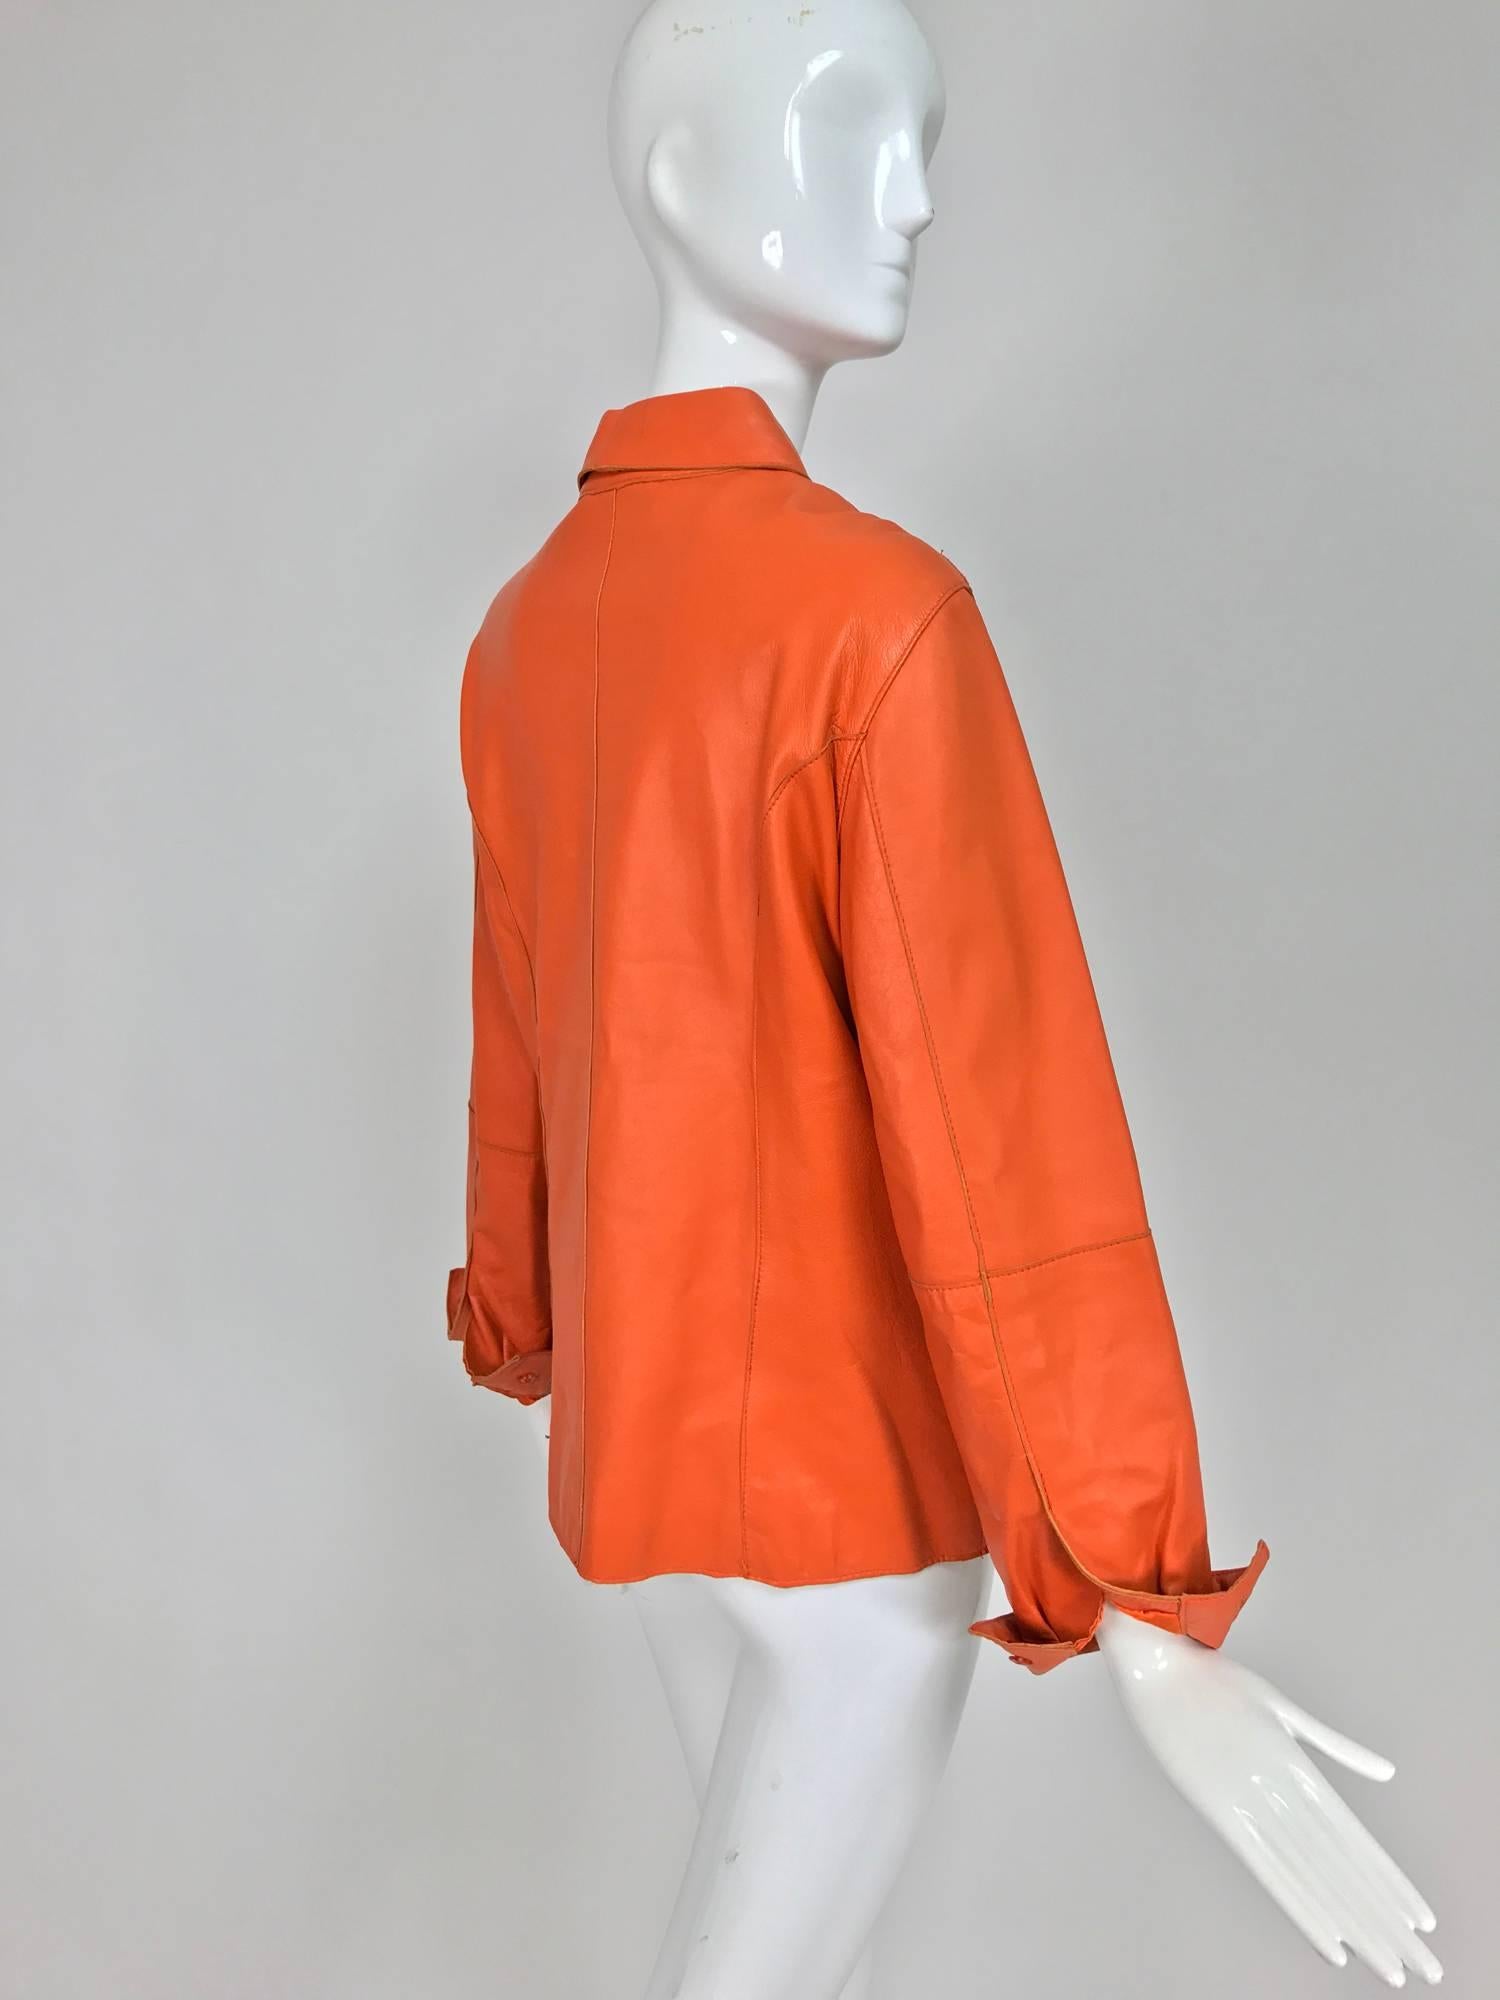 Vintage orange leather button front shirt jacket 1970s 1